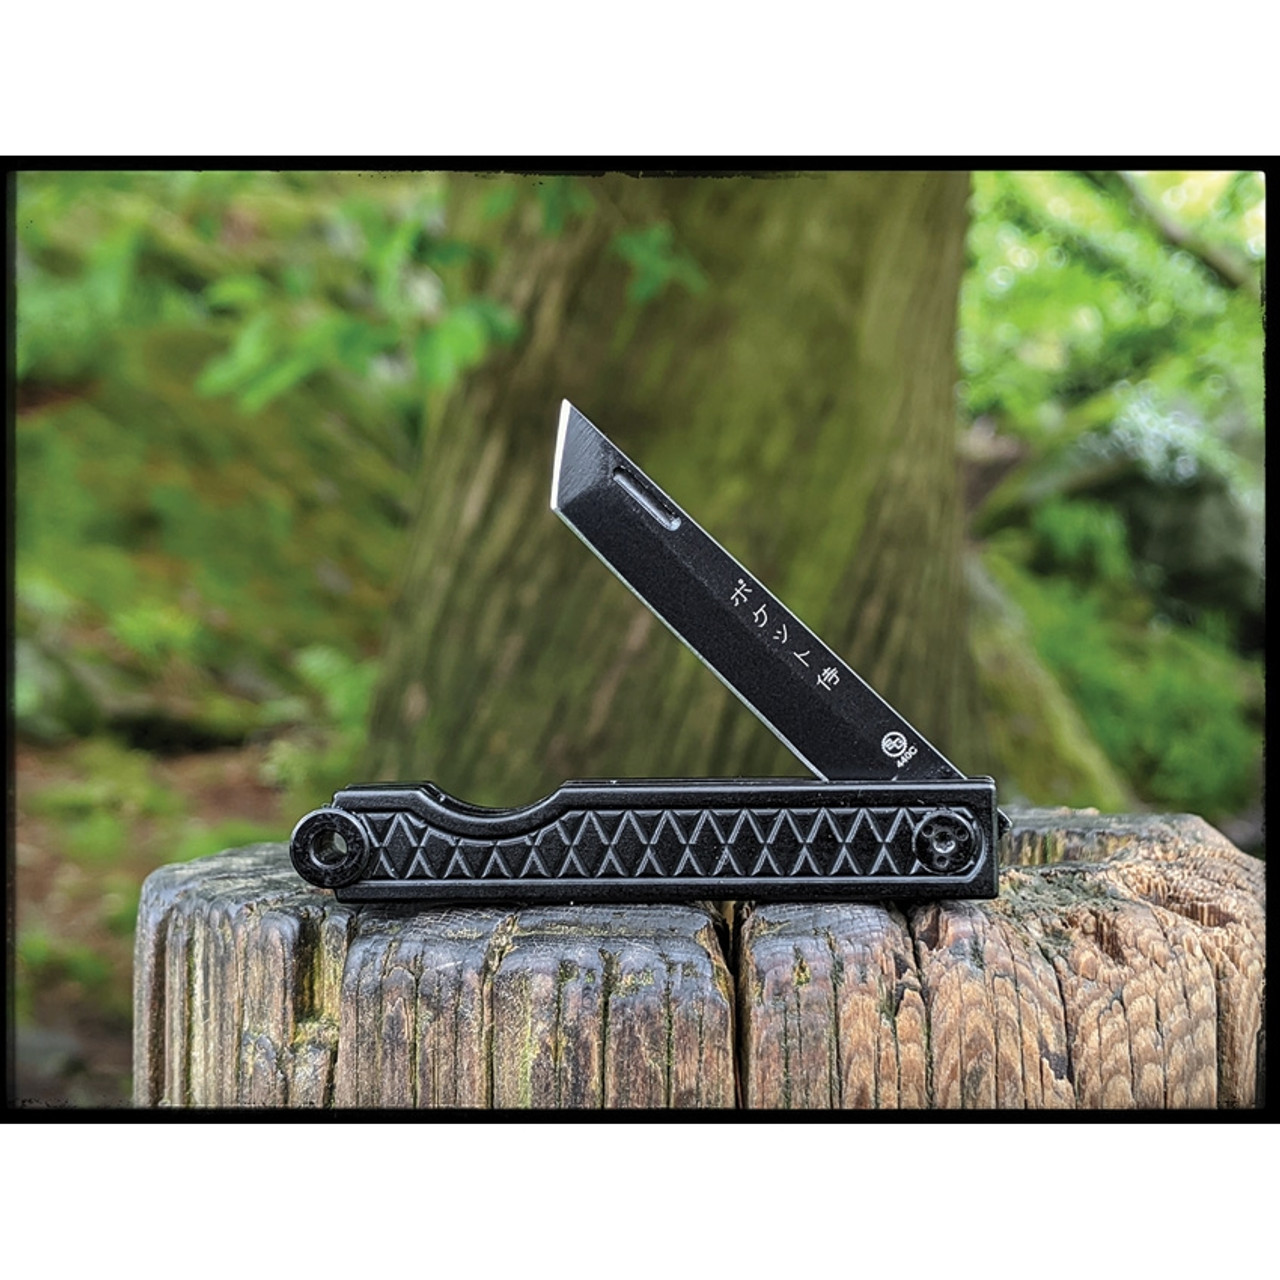 StatGear Pocket Samurai Folding Knife STAT116, 2.1" 44OC Satin Plain Blade, Black Aluminum Handle